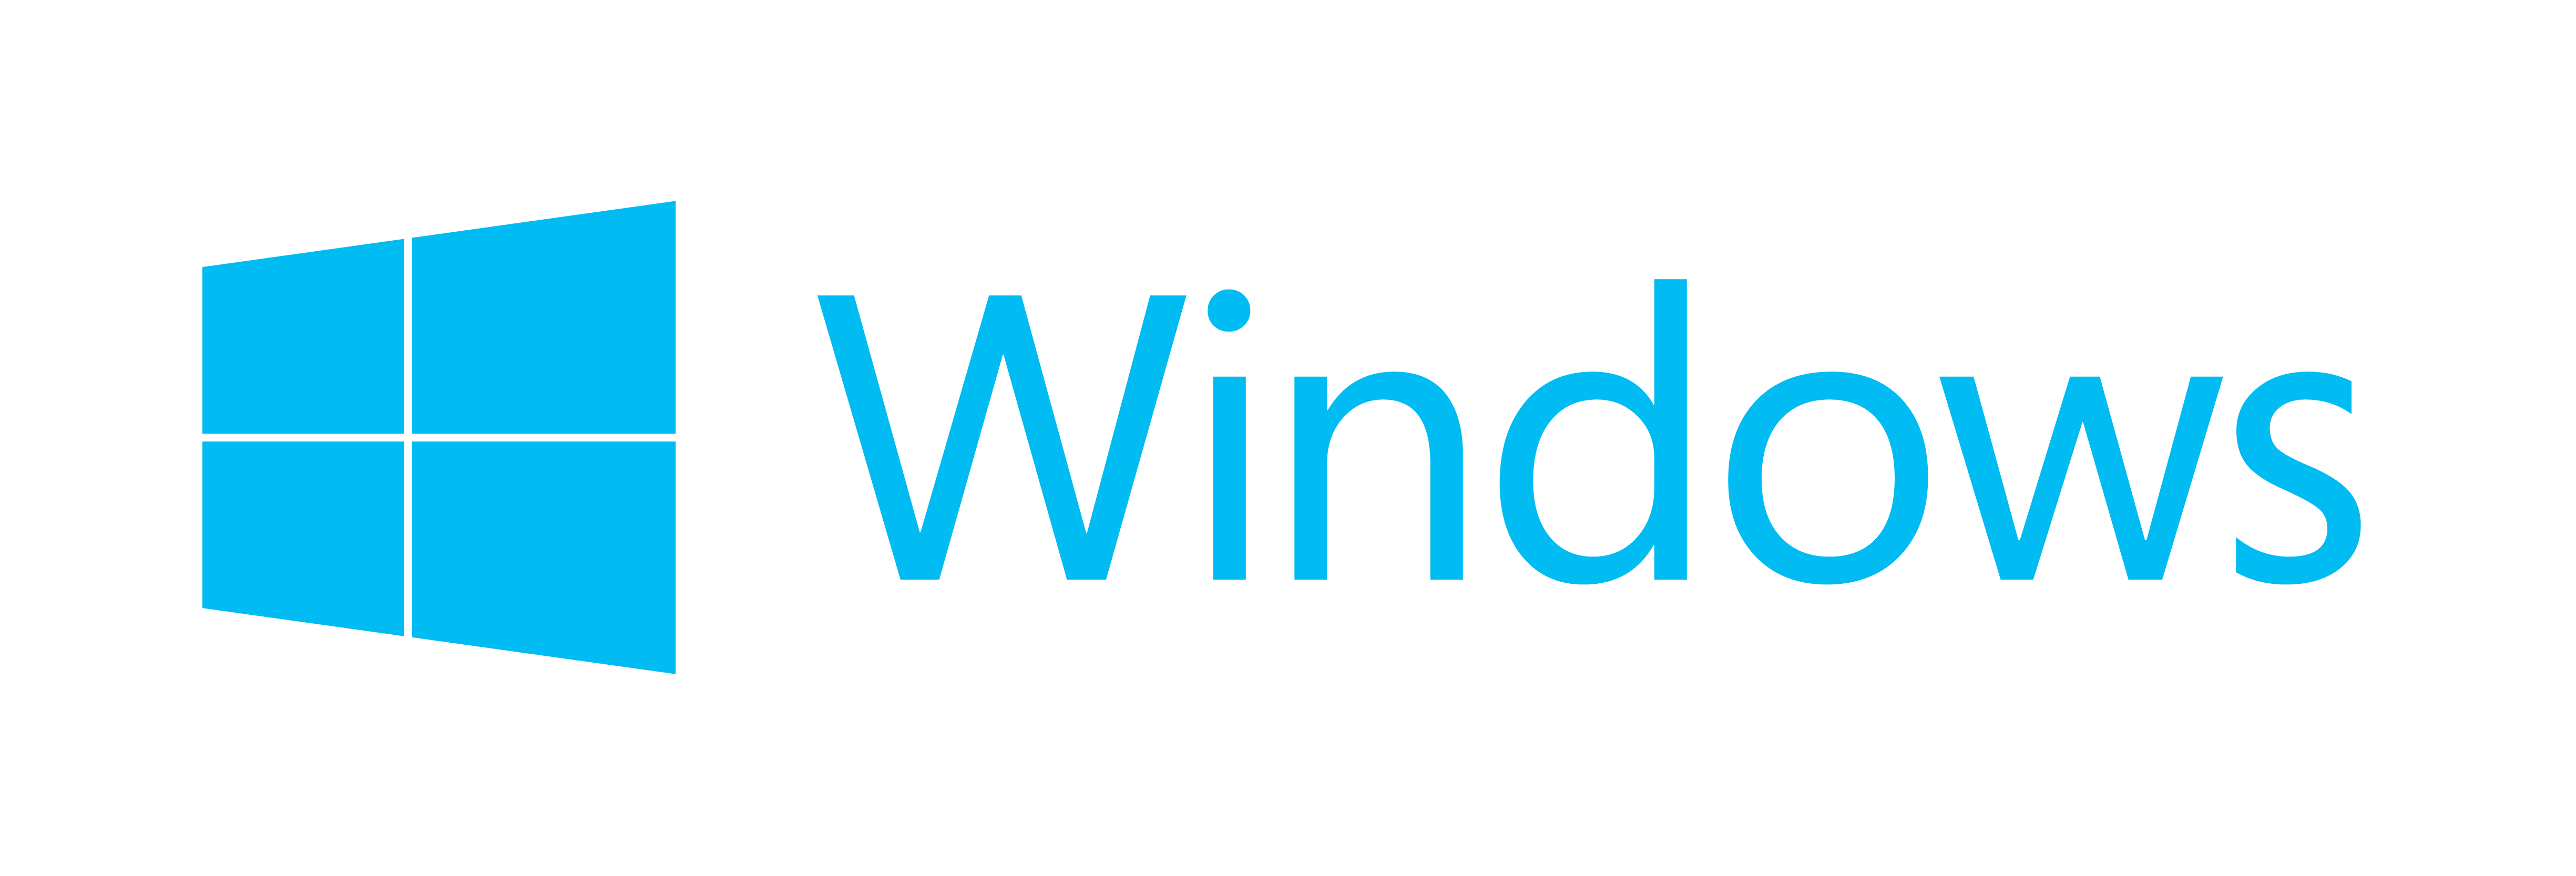 Microsoft Windows PNG Clipart